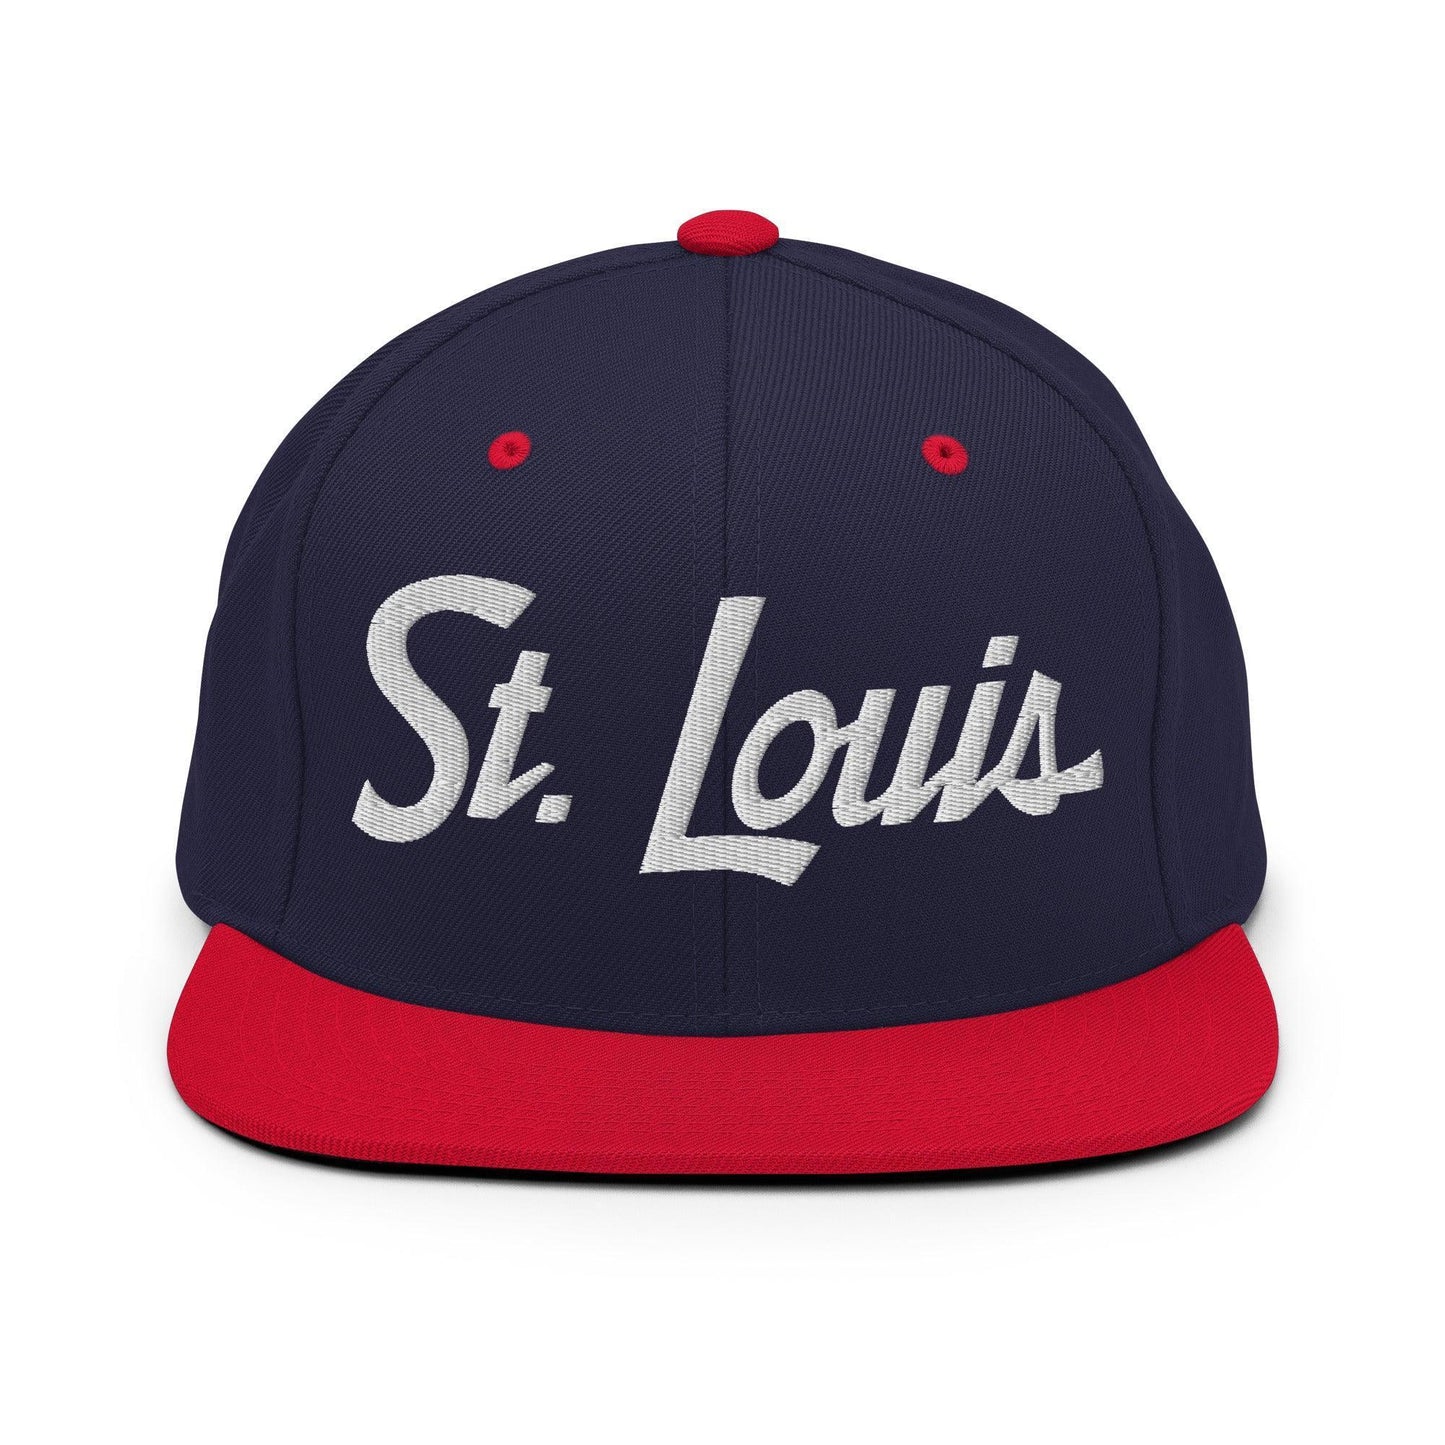 St. Louis Script Snapback Hat Navy Red